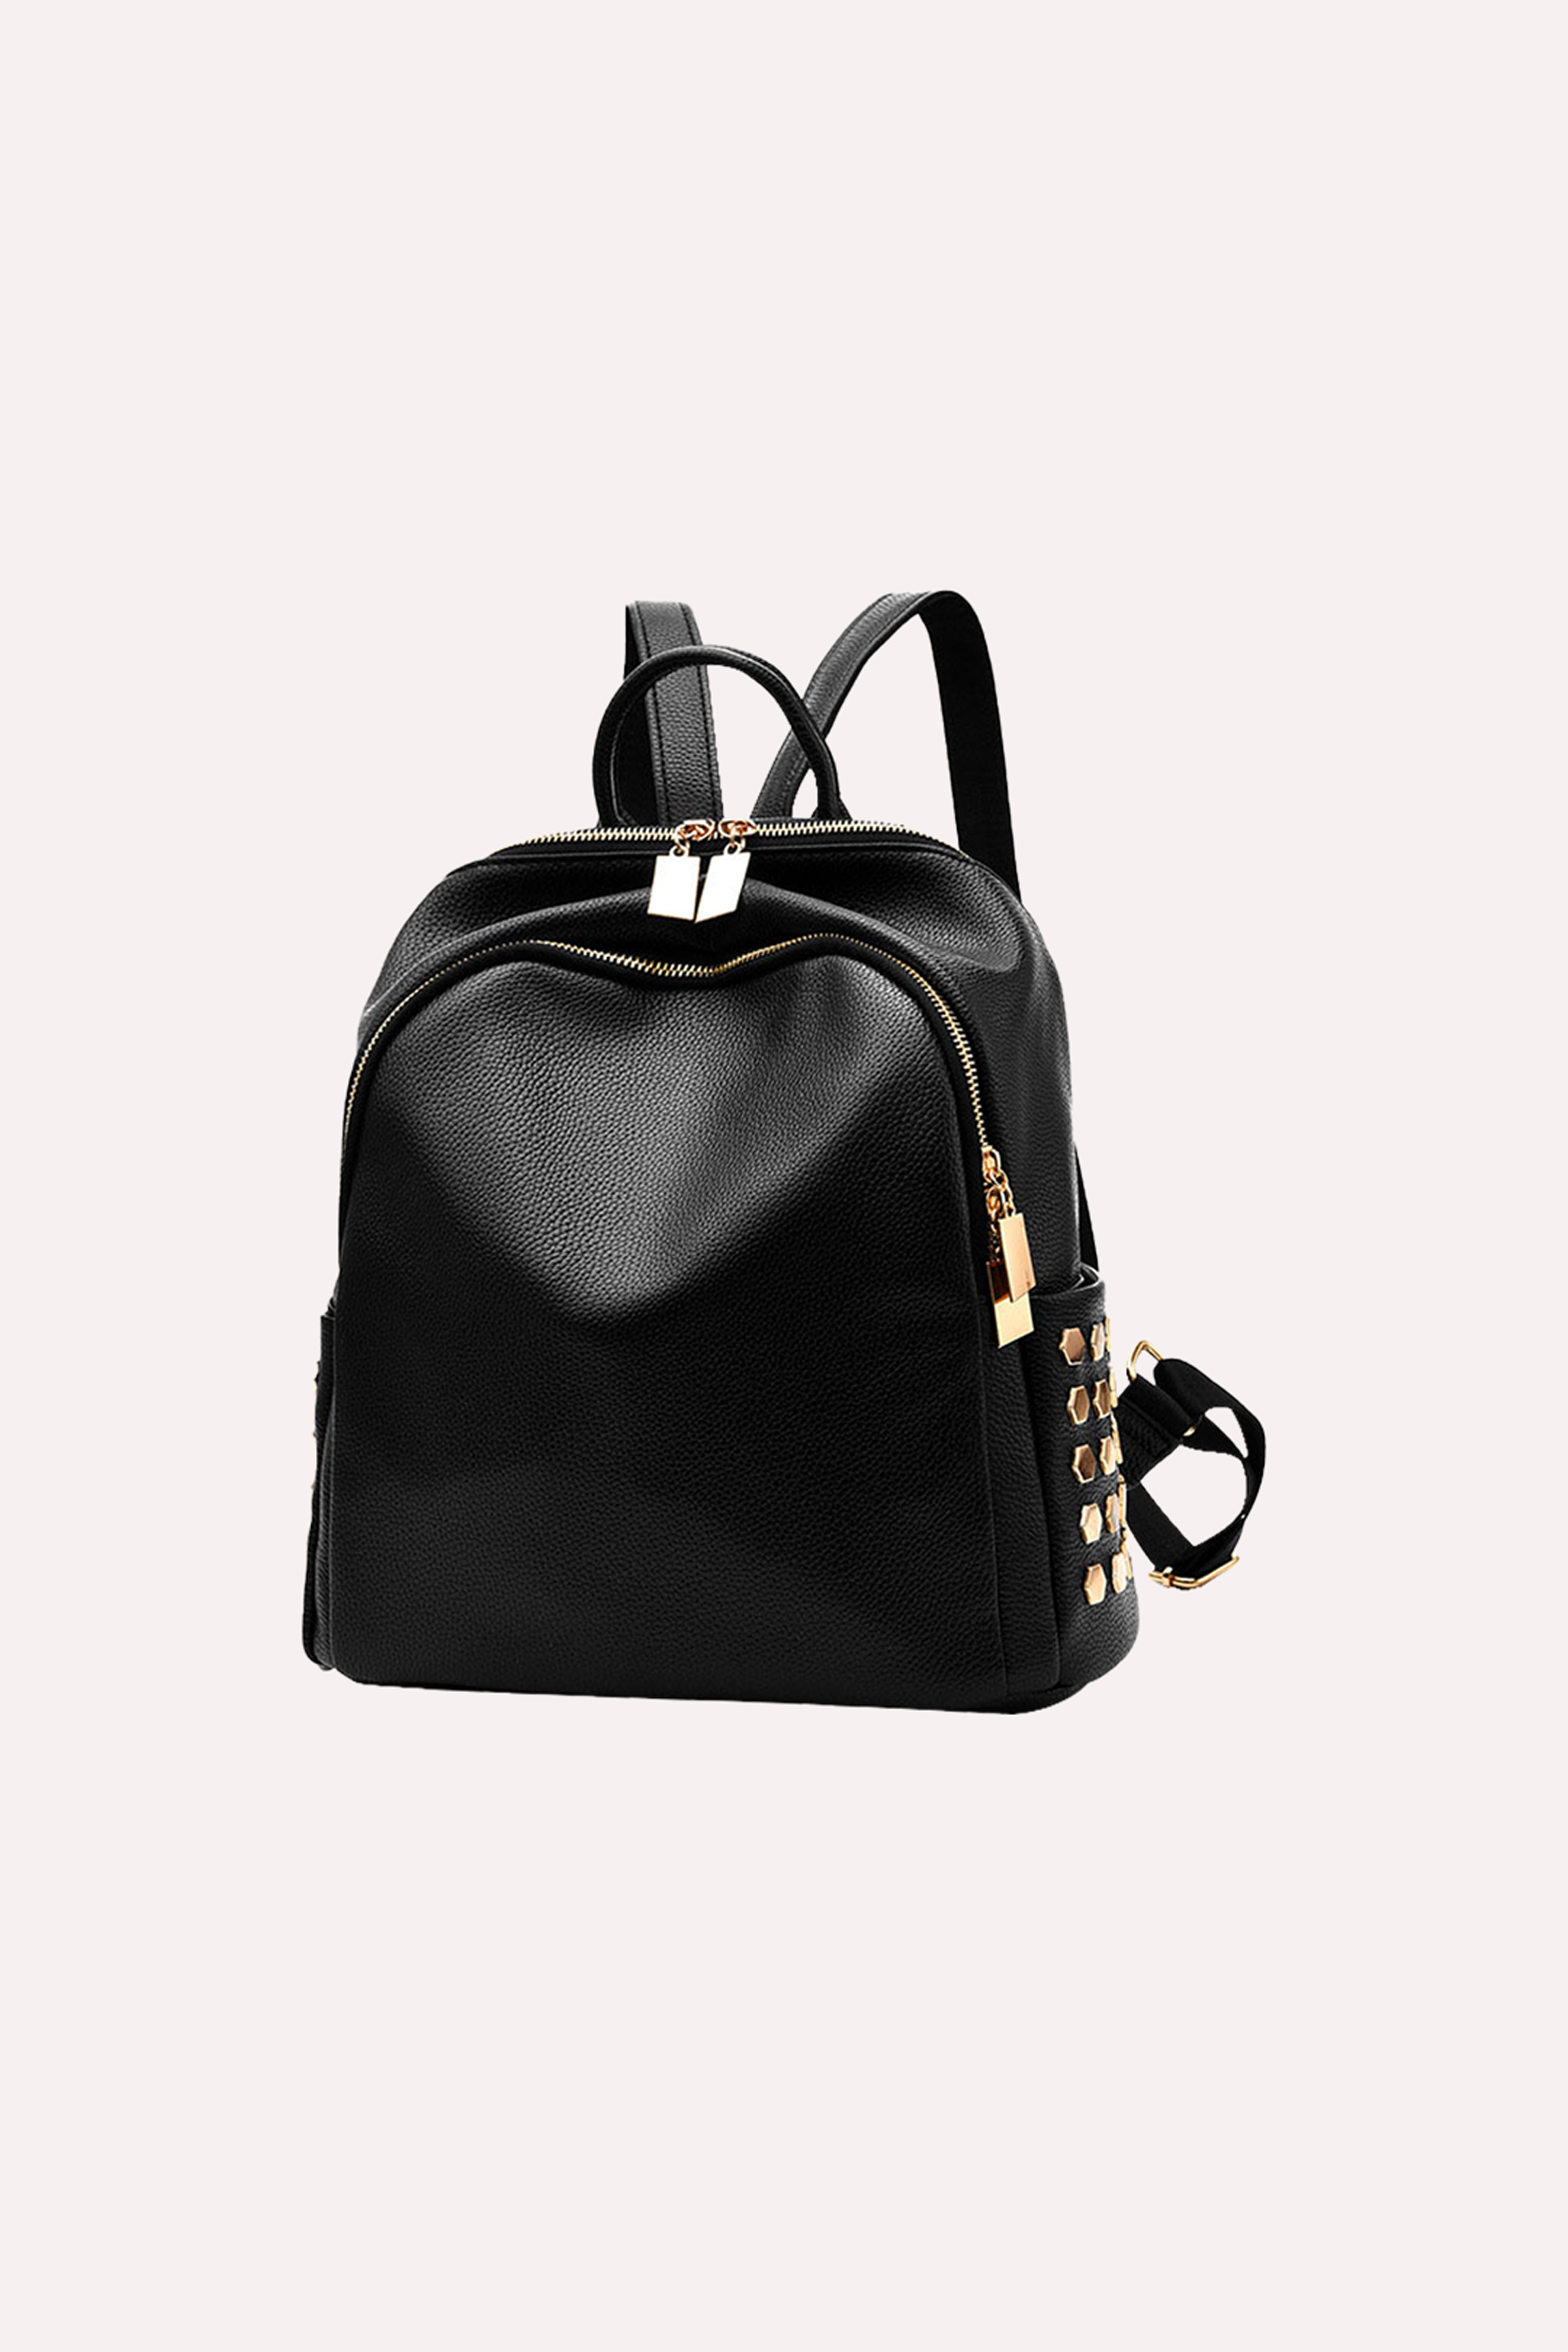 Men Travel Backpack Original Leather Fashion University School Designer Bags  | eBay